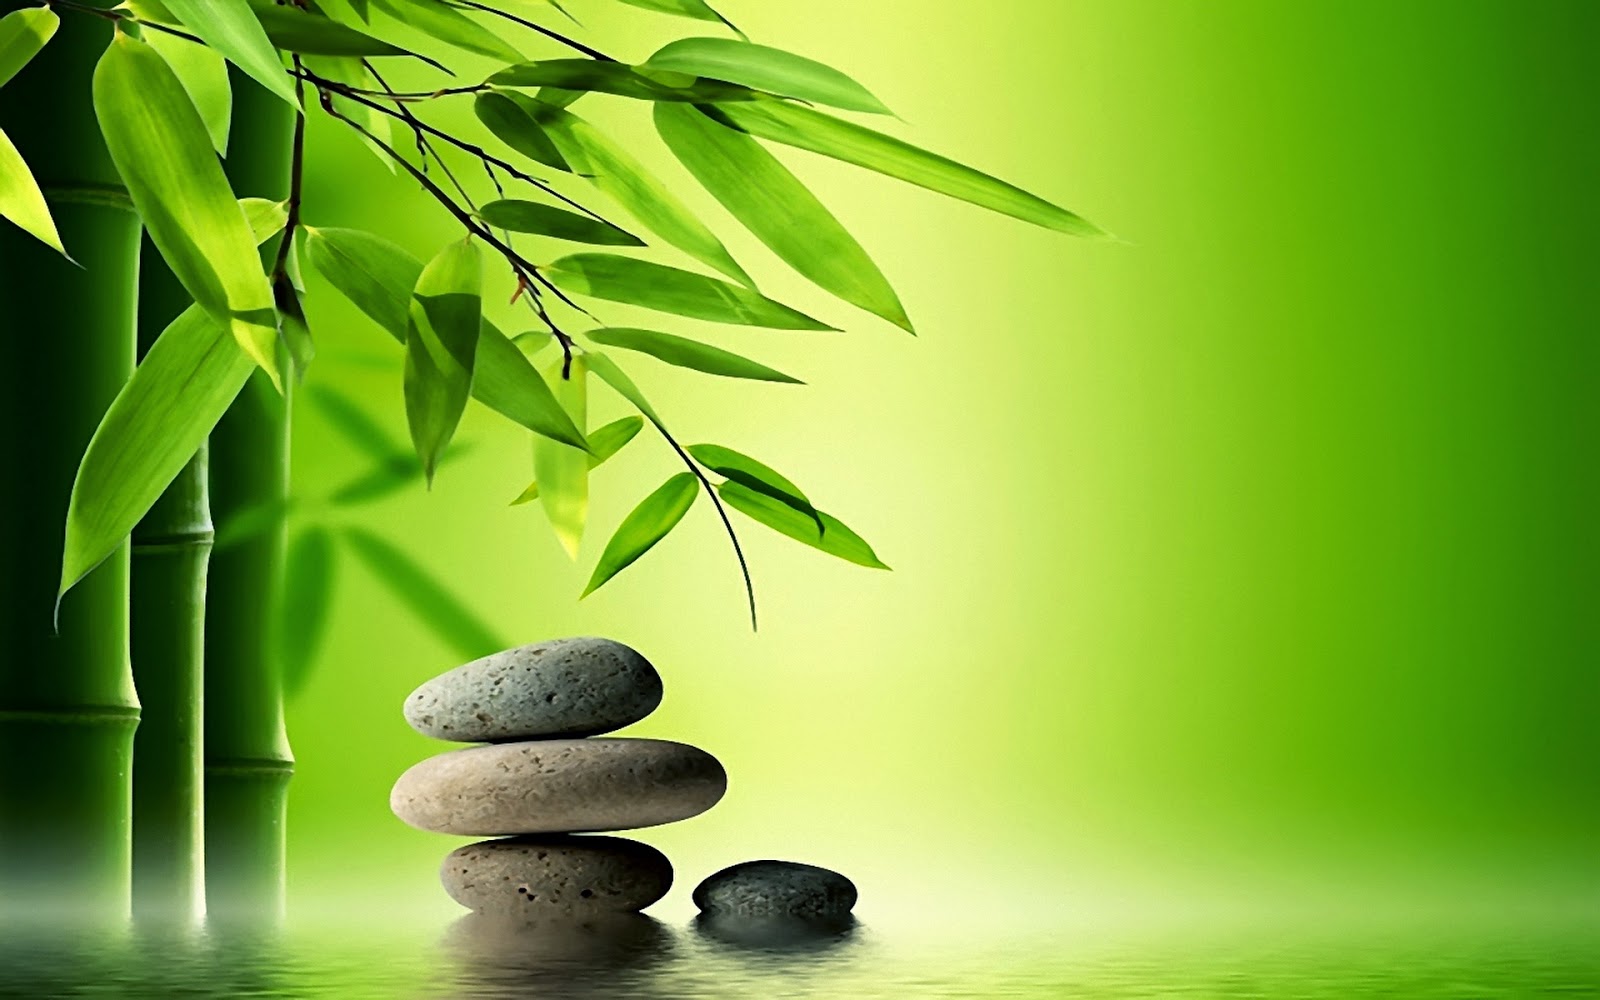 Zen Meditation Pictures 1080p Full HD Widescreen Wallpaper Pixhome